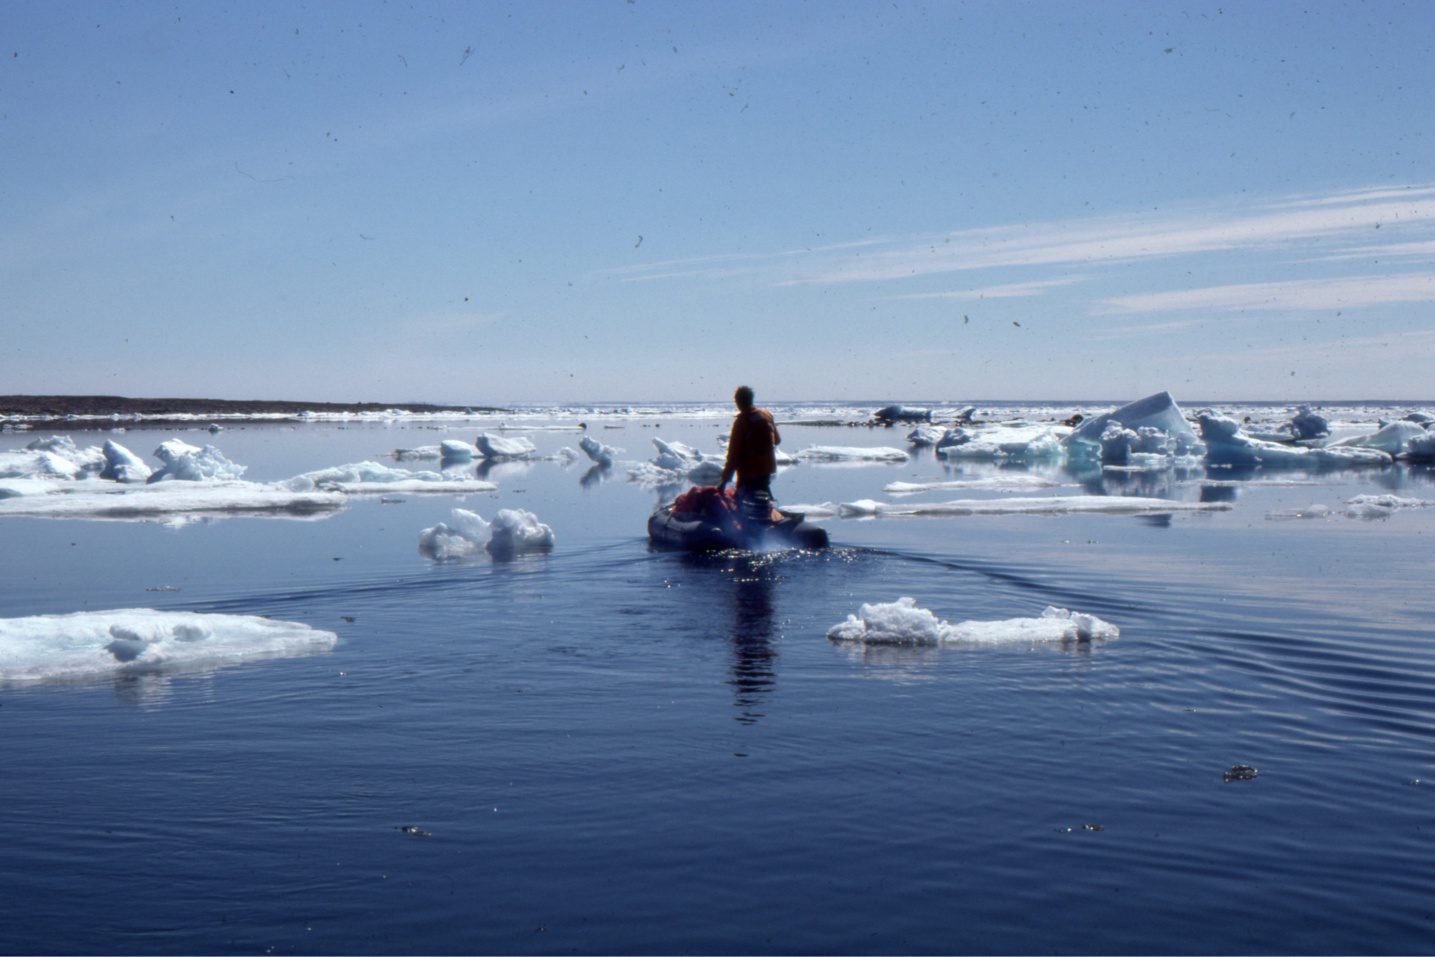 Pocket Sized - Found Image Press Journals: Vintage Journal Ice Fishing on  Bering Sea (Paperback) 